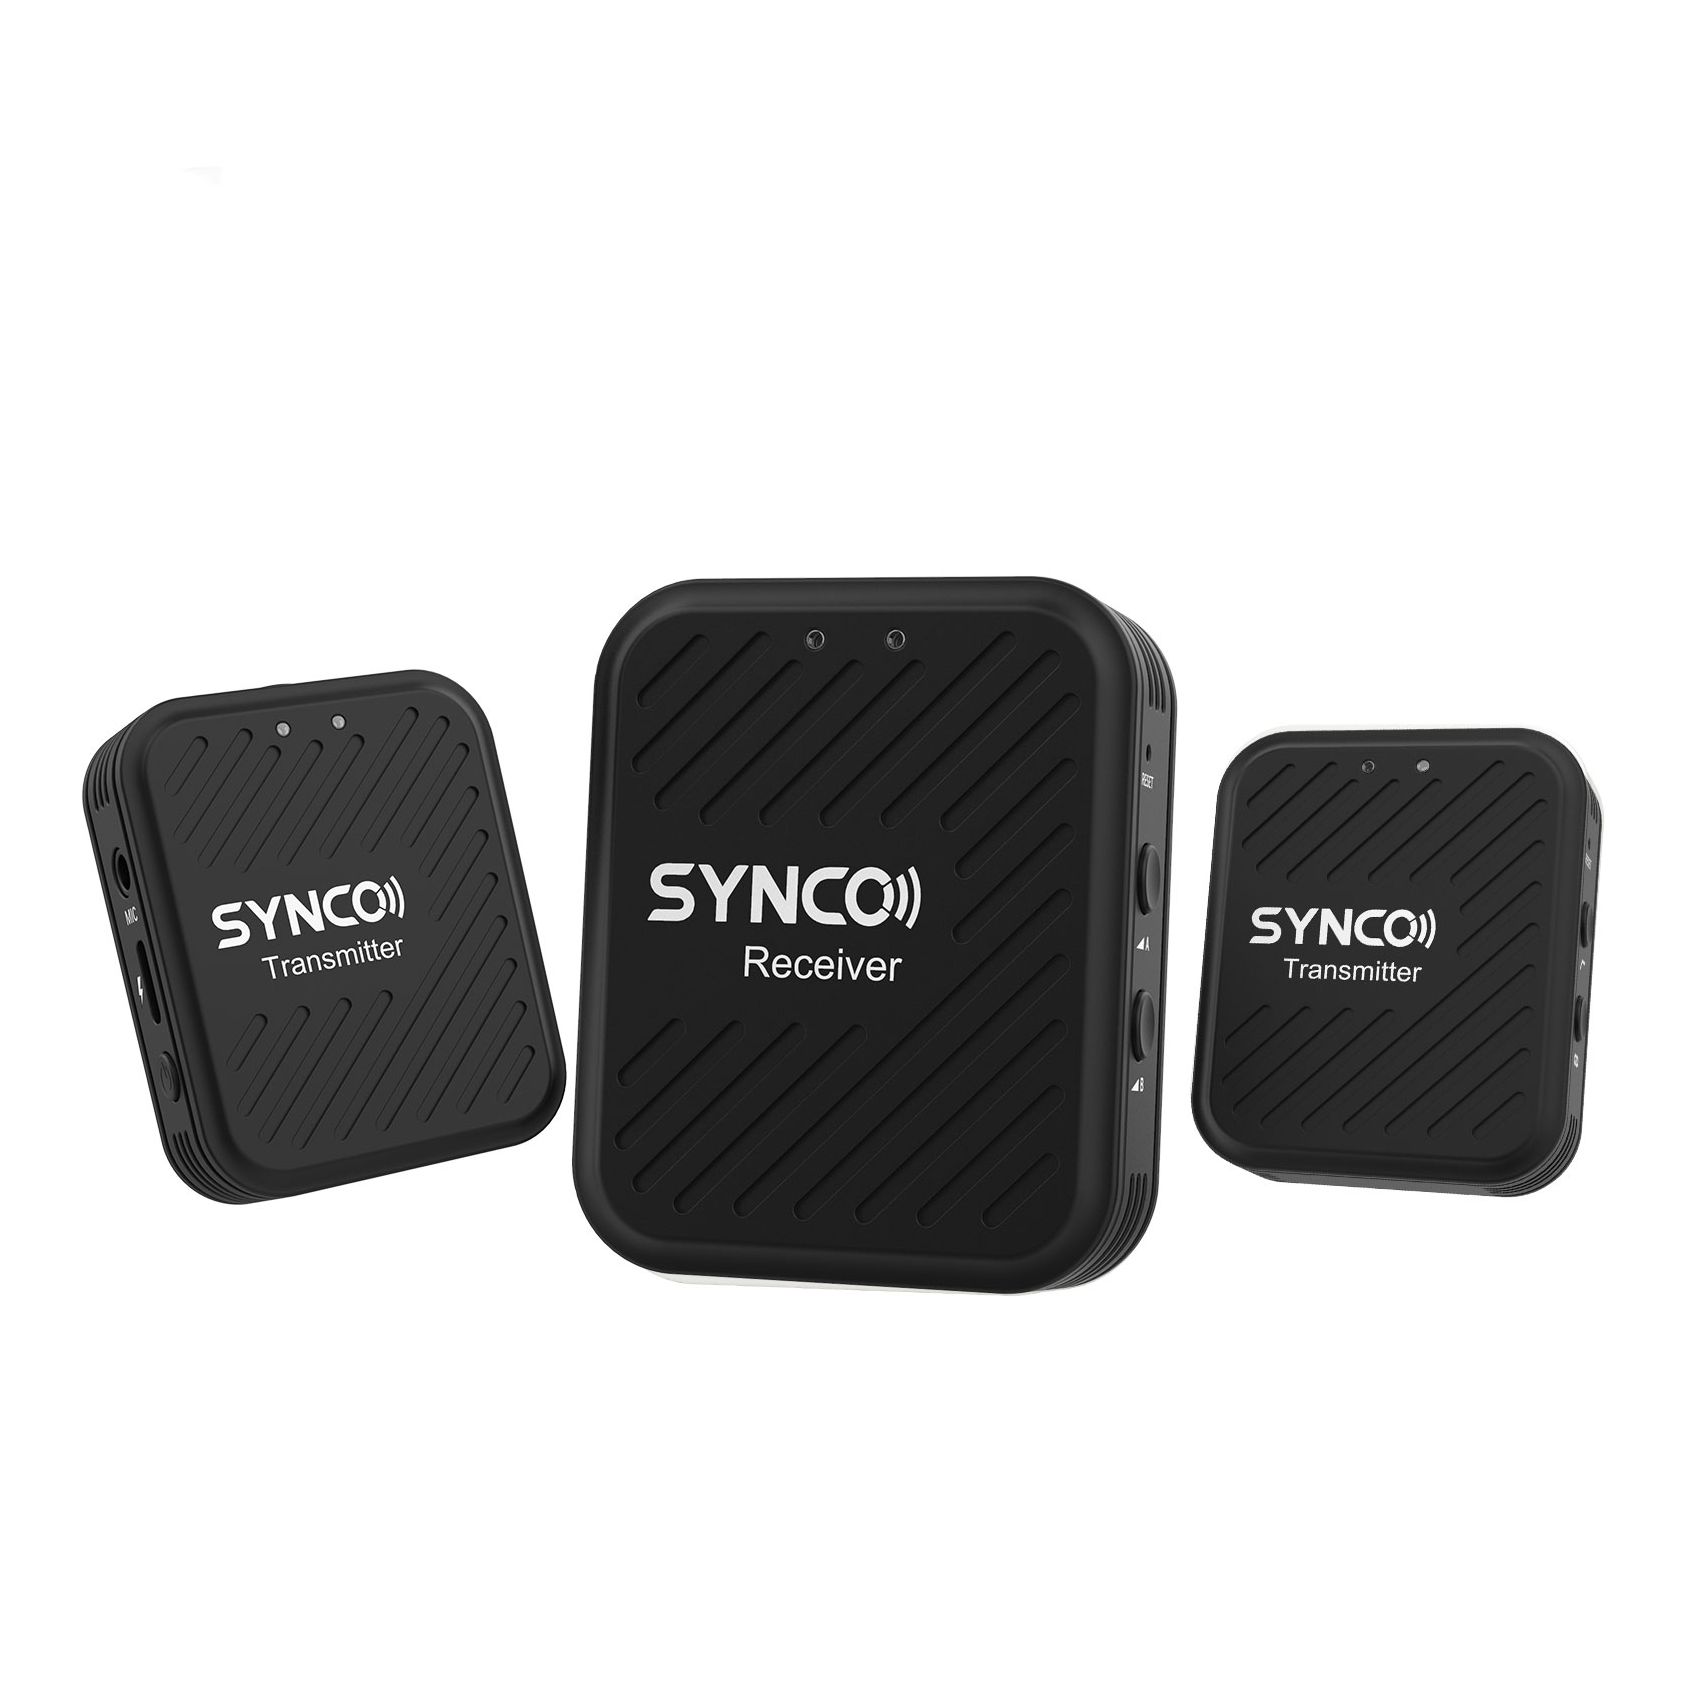 Приемники и передатчики Synco G1(A2) приемники и передатчики beyerdynamic se 900 uhf 798 822 mhz in ear стерео передатчик